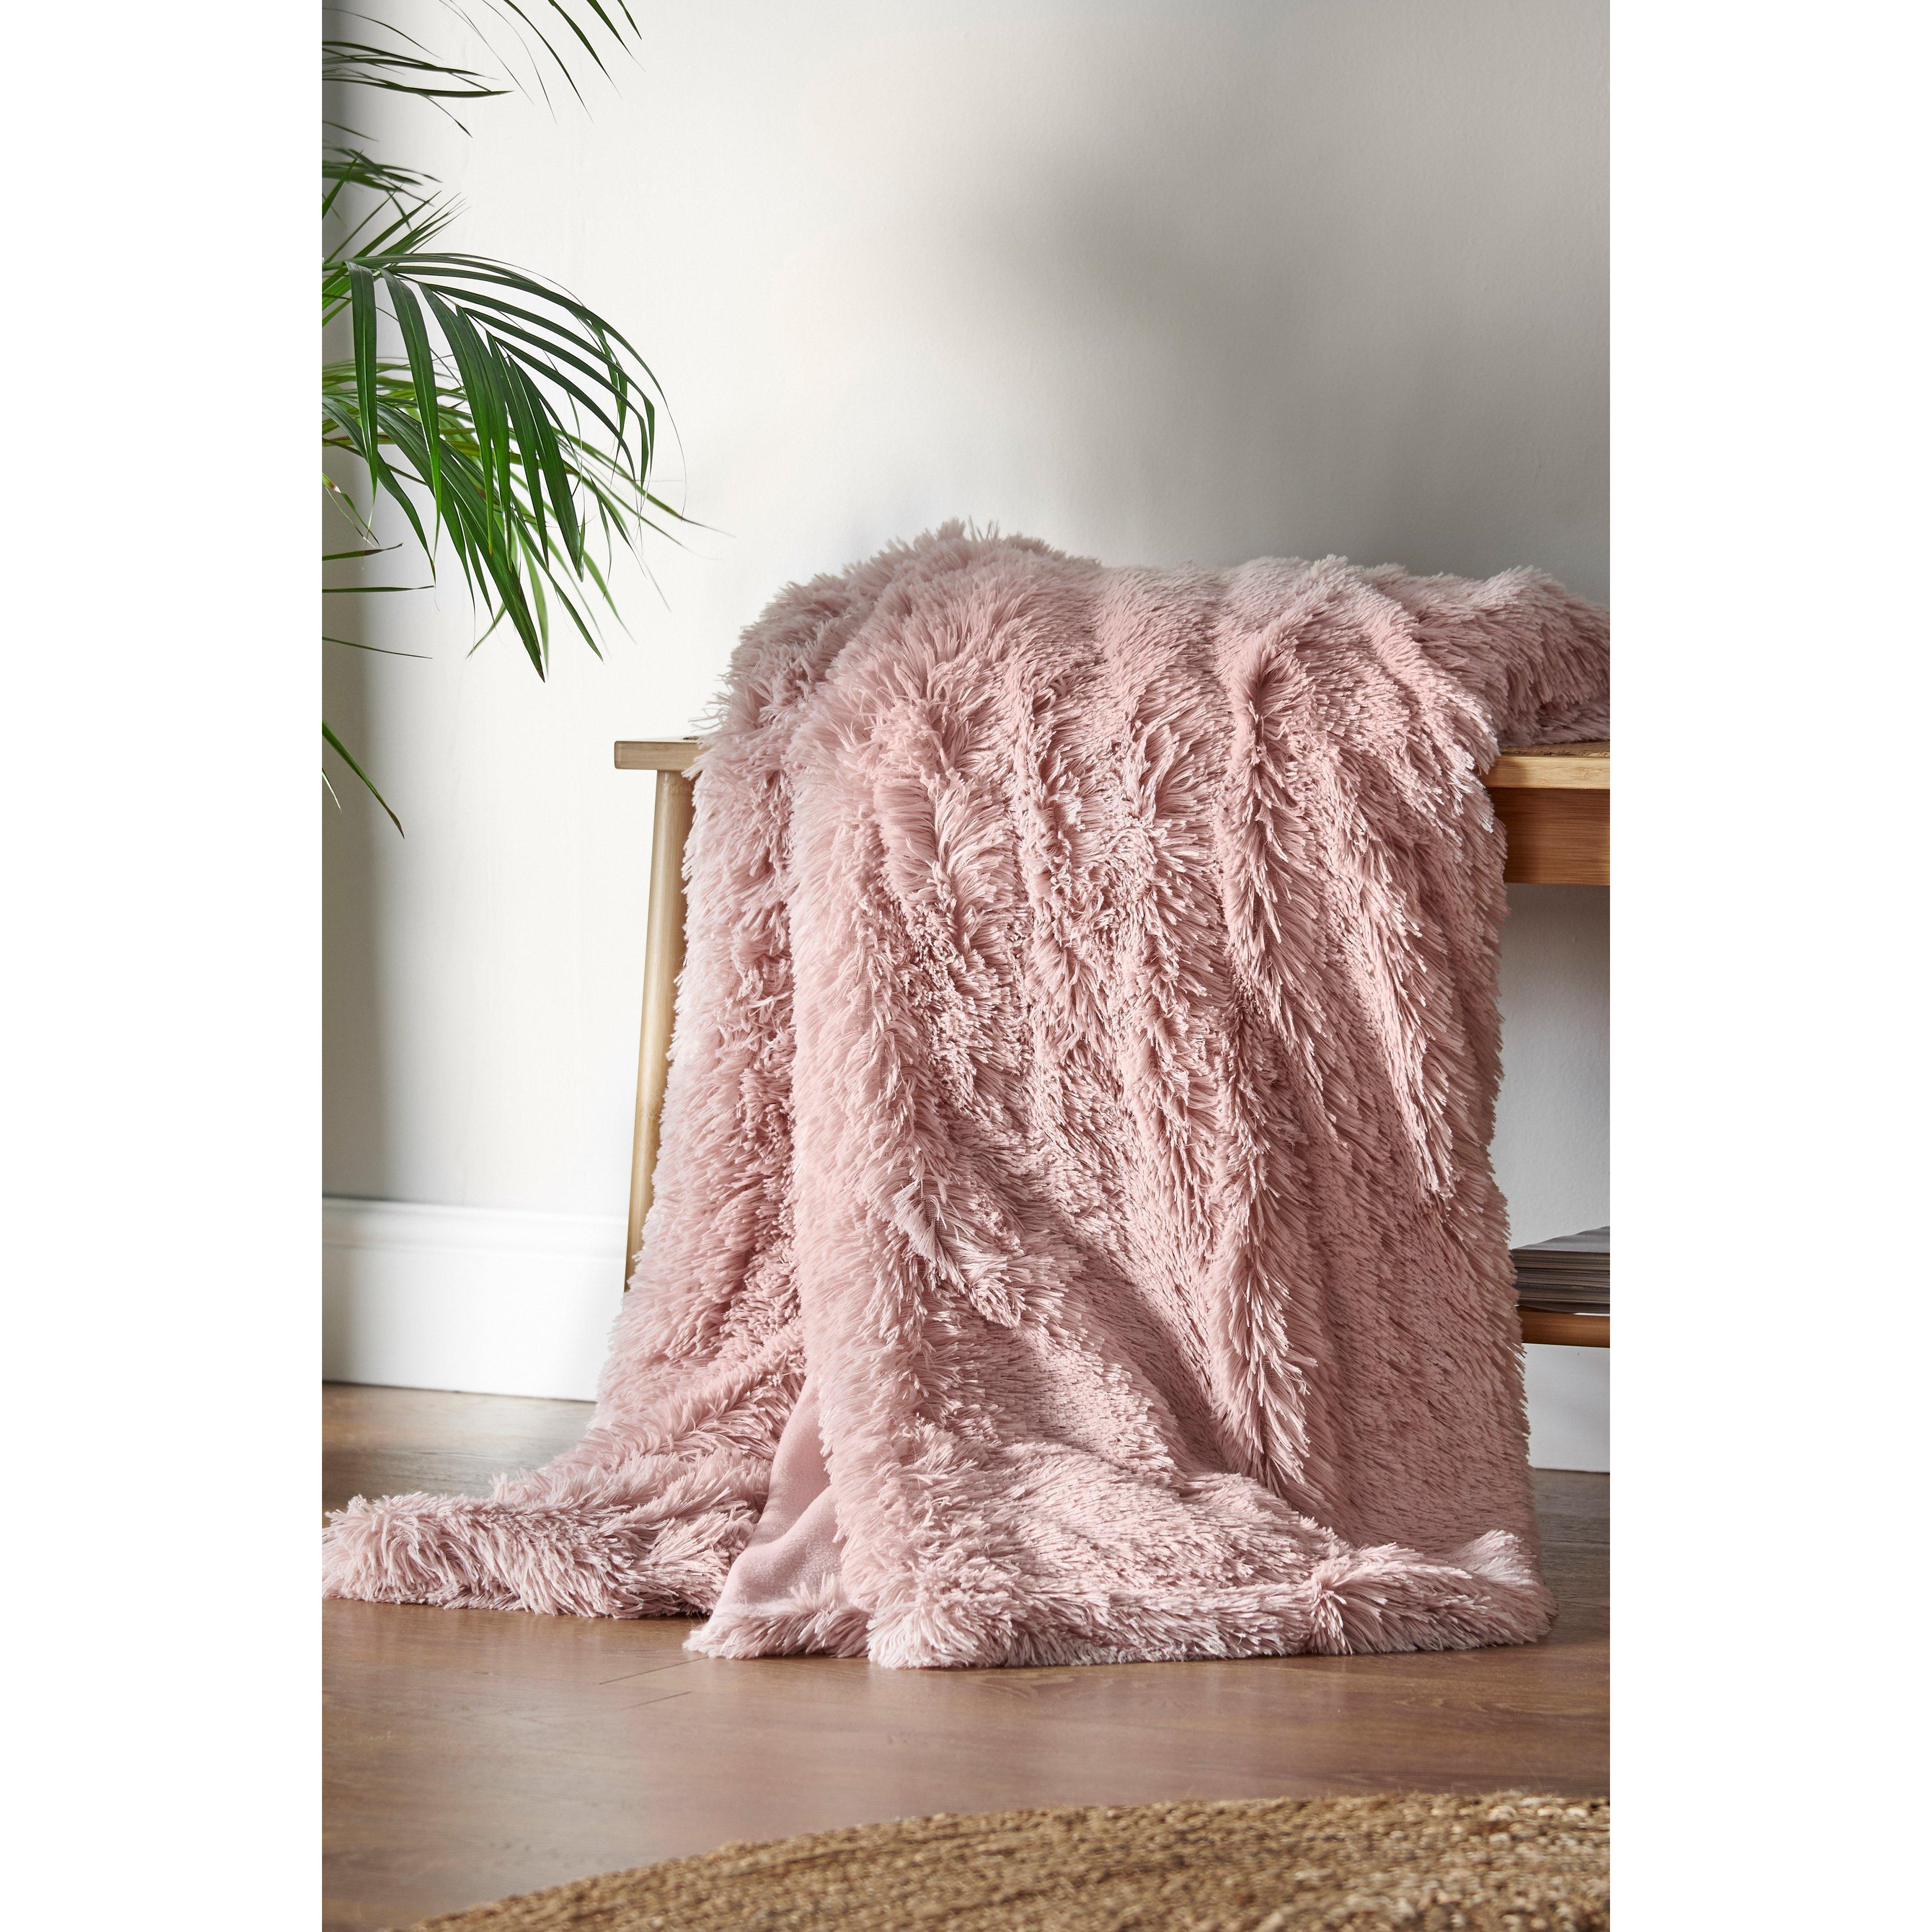 'Cuddly' Blanket Throw - image 1